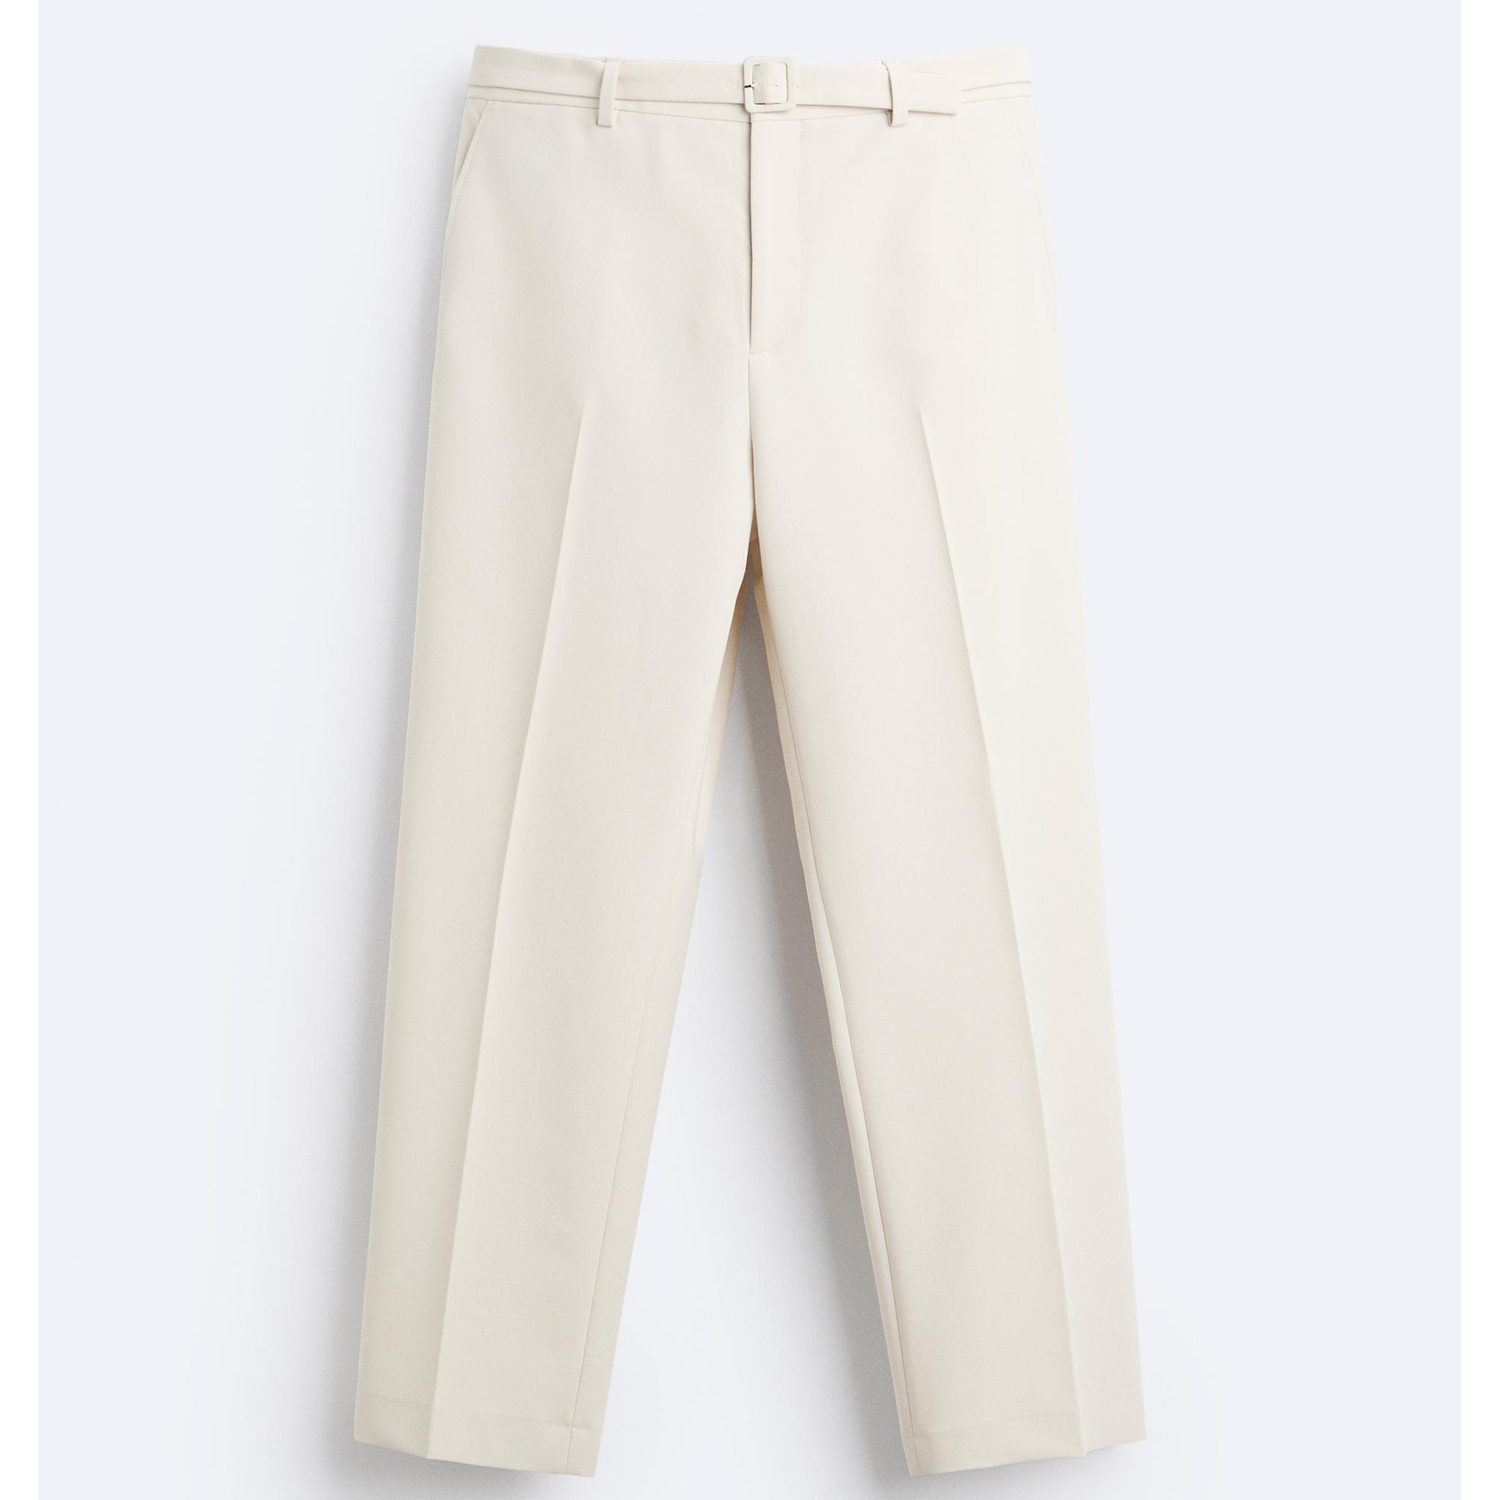 Брюки Zara Belted, экрю брюки zara карманы с ремнем размер 50 бежевый